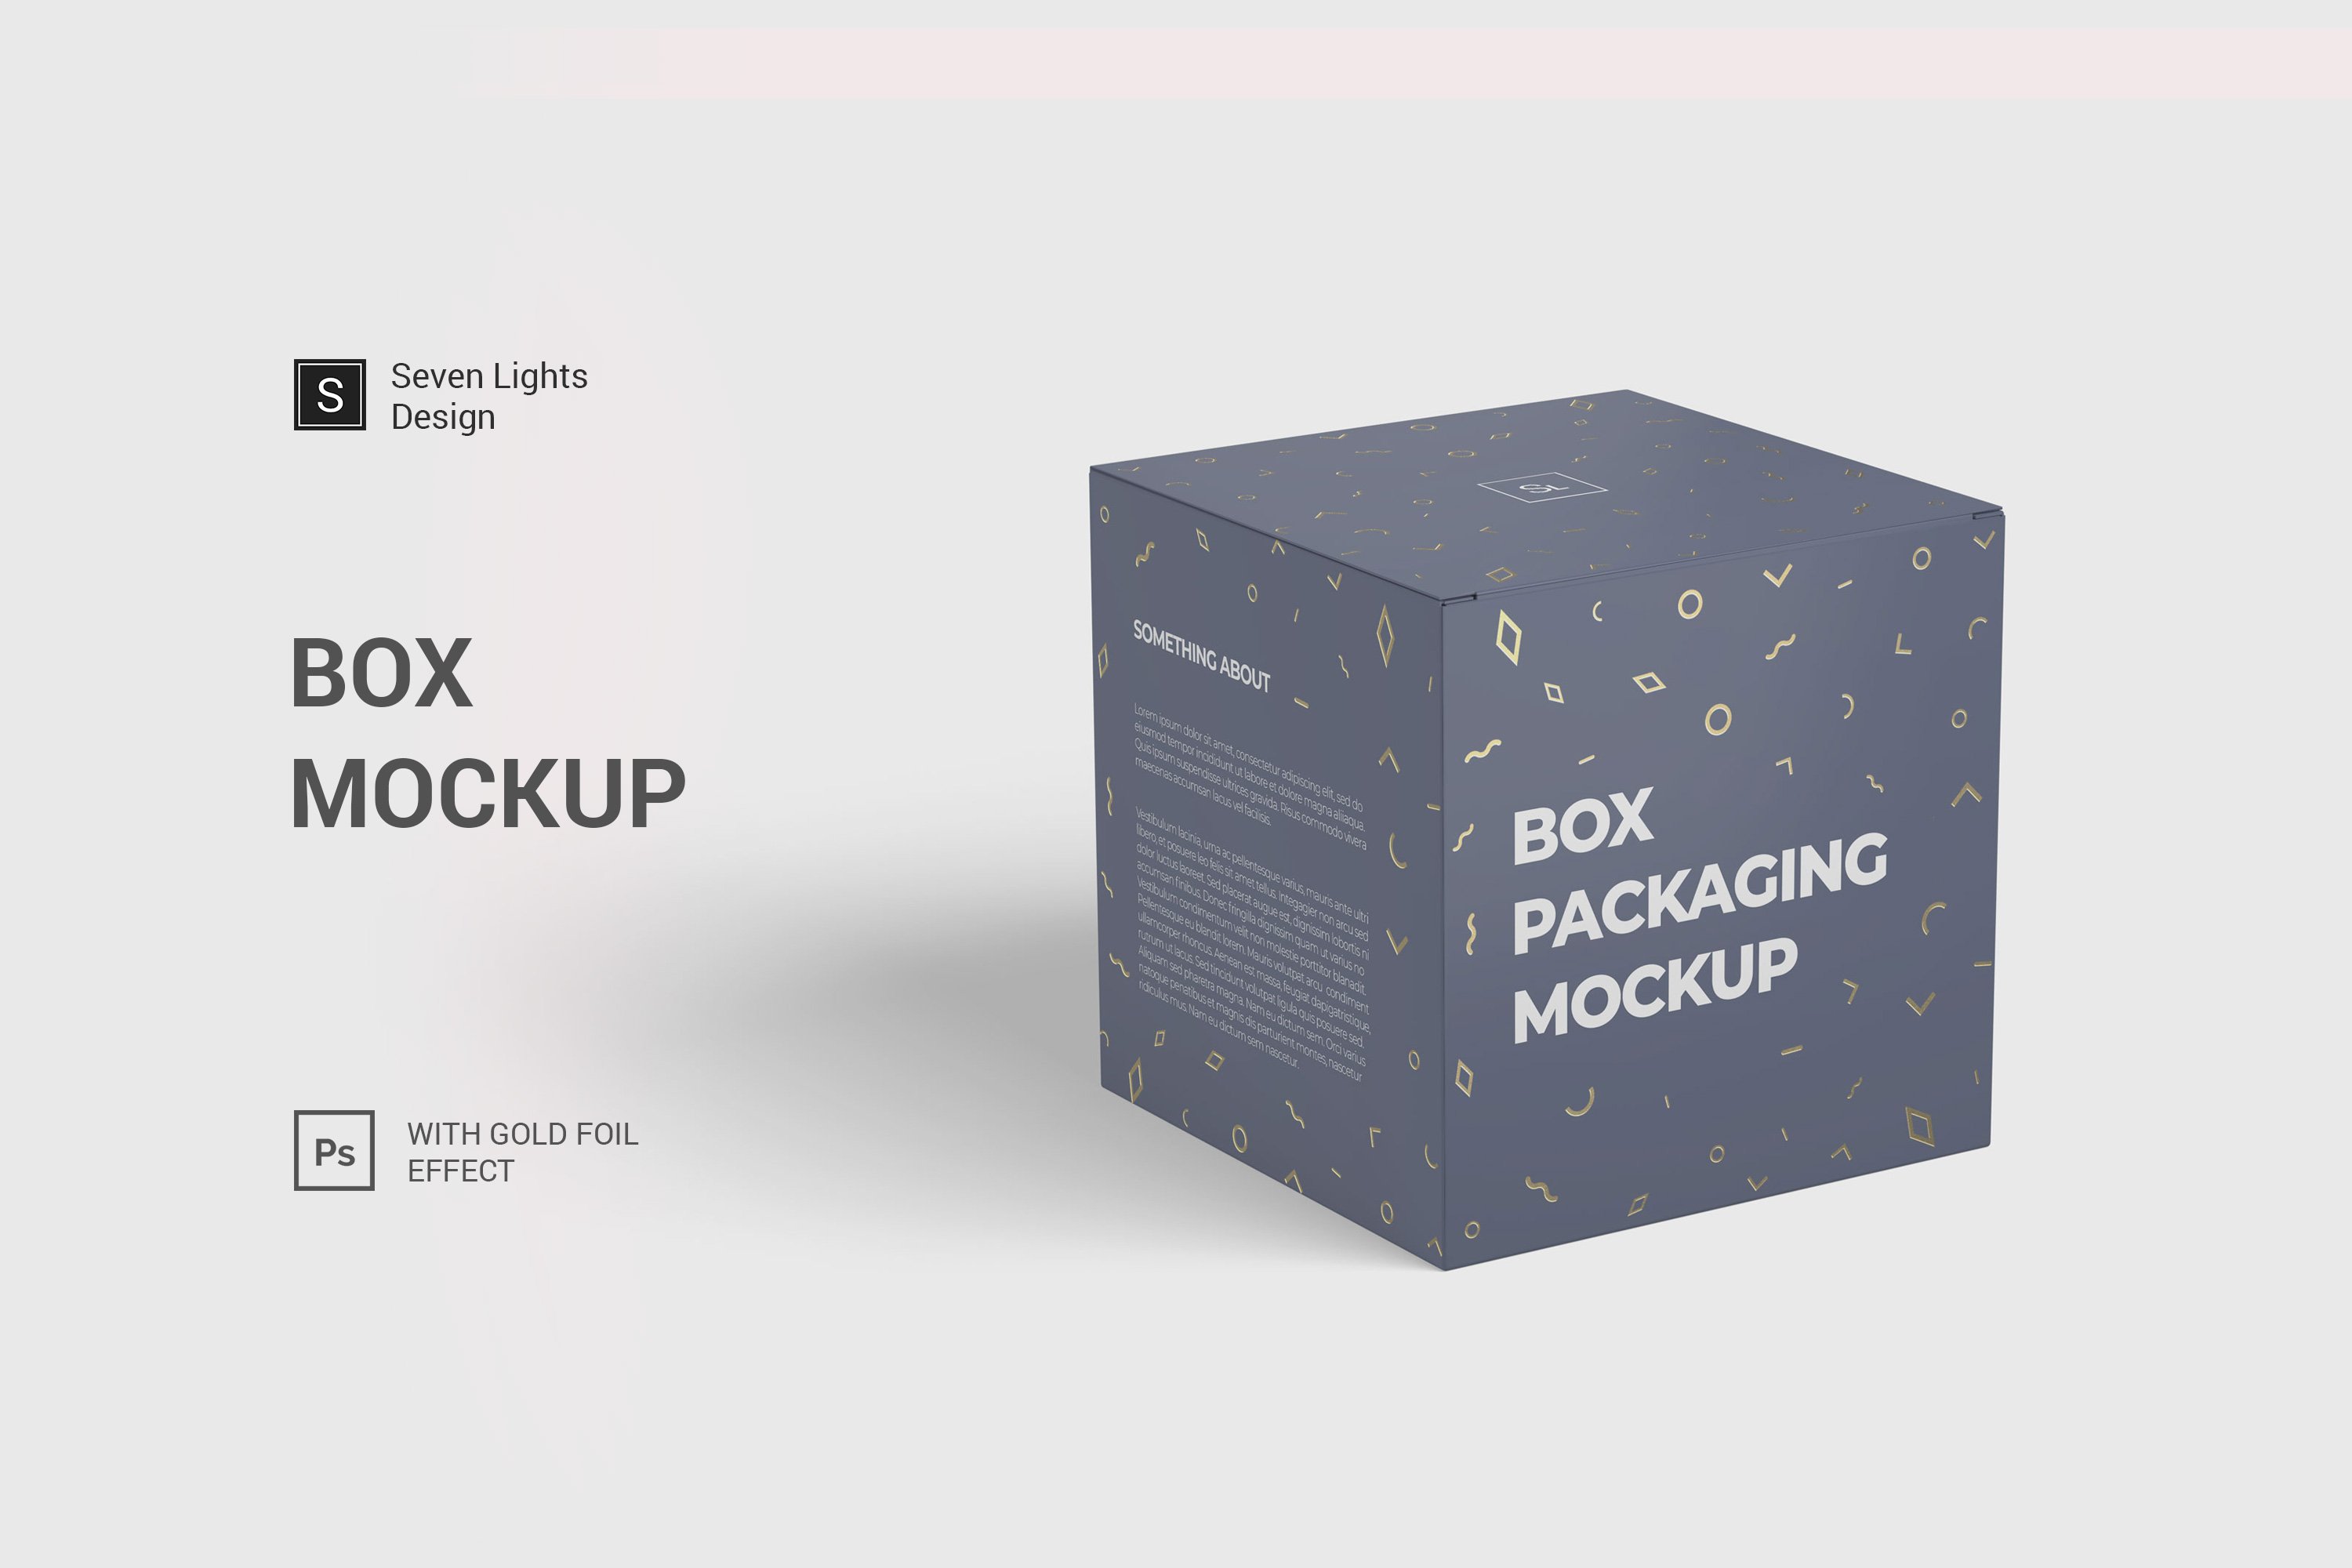 Box | Packaging Mockup cover image.